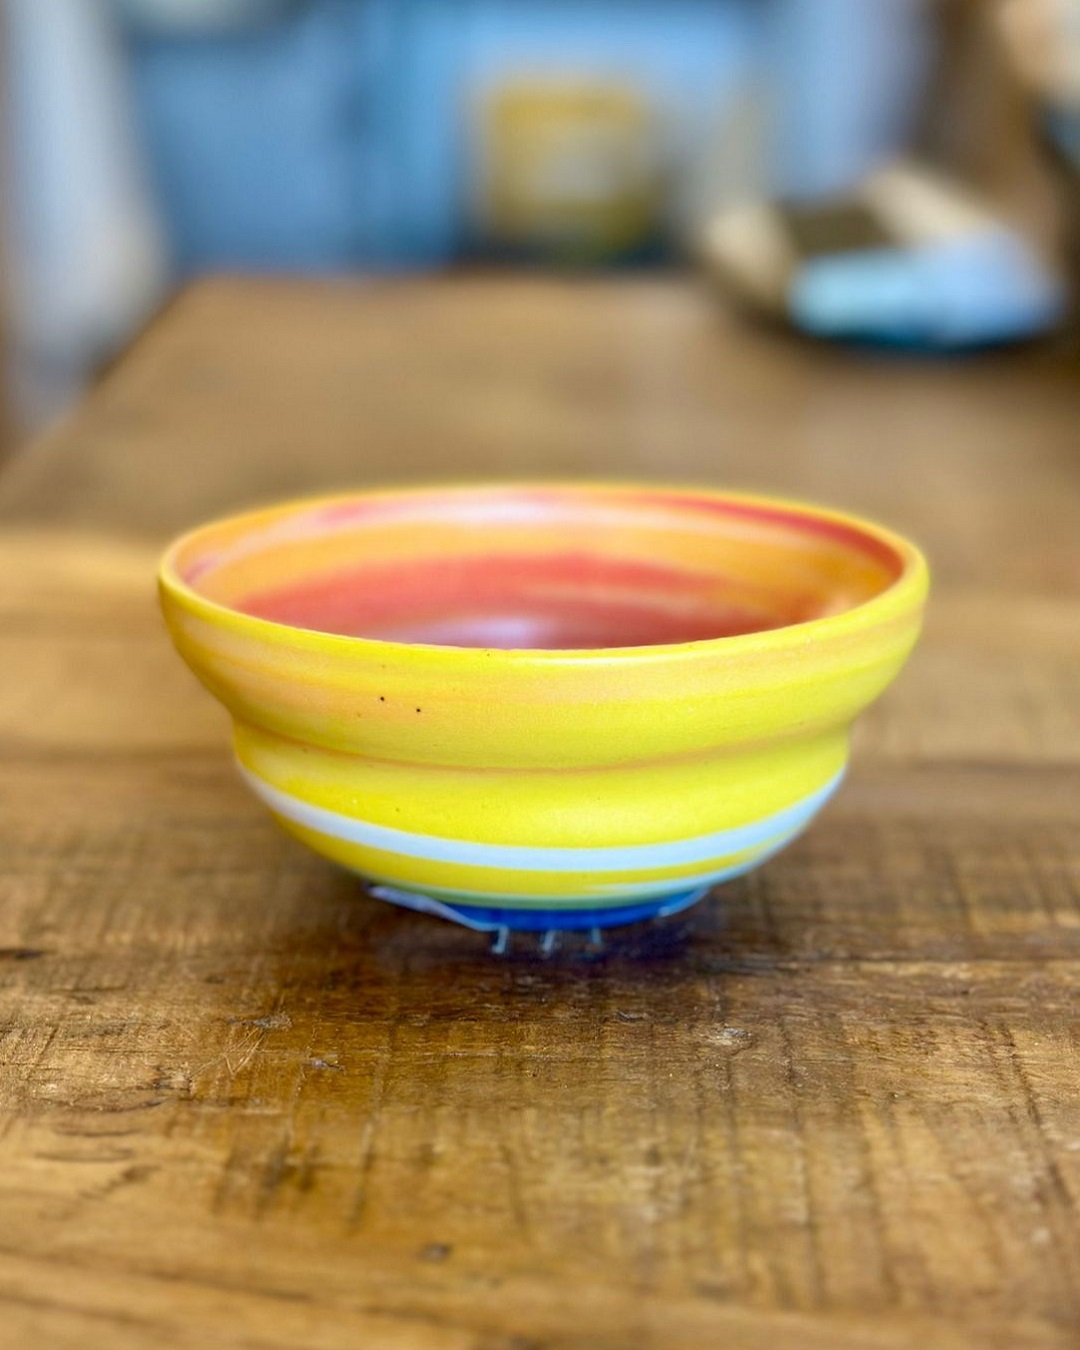 Rainbow ceramic bowl on wooden table